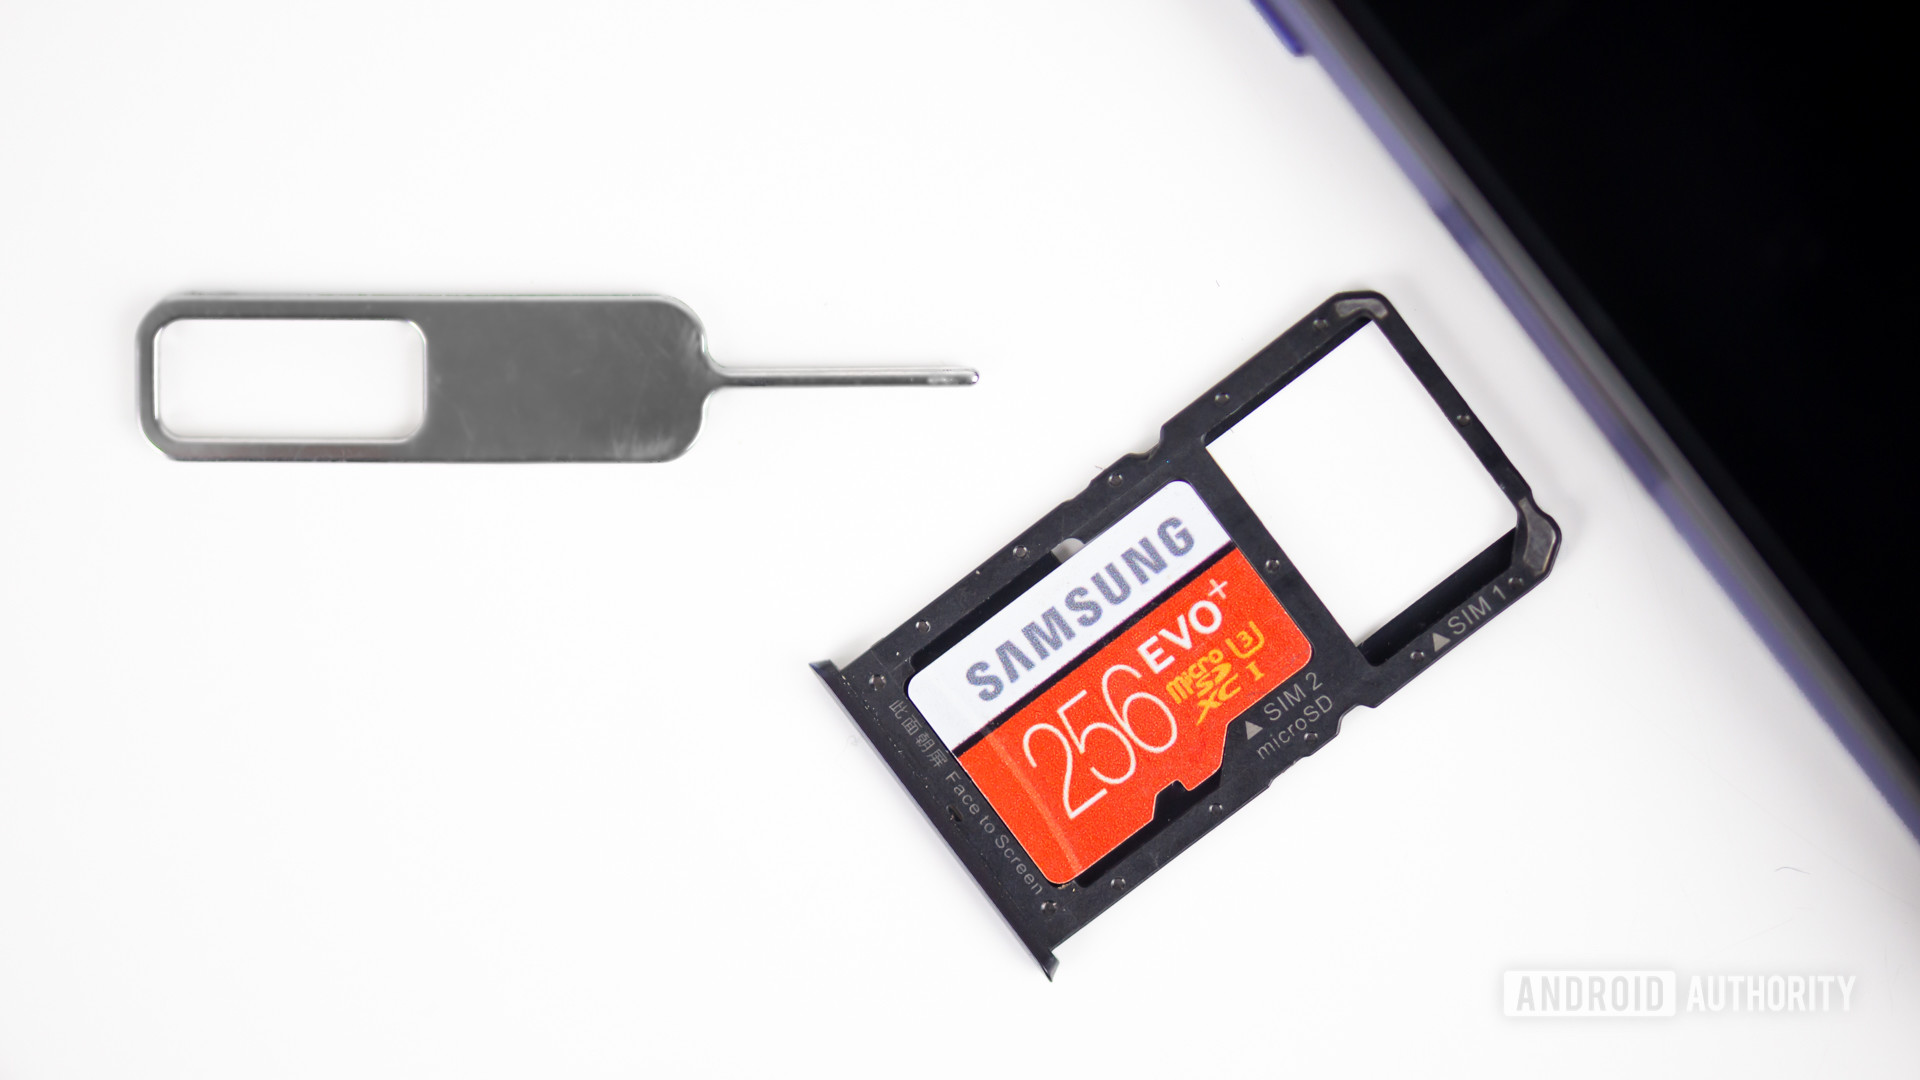 Fente pour carte MicroSD stock photo 5